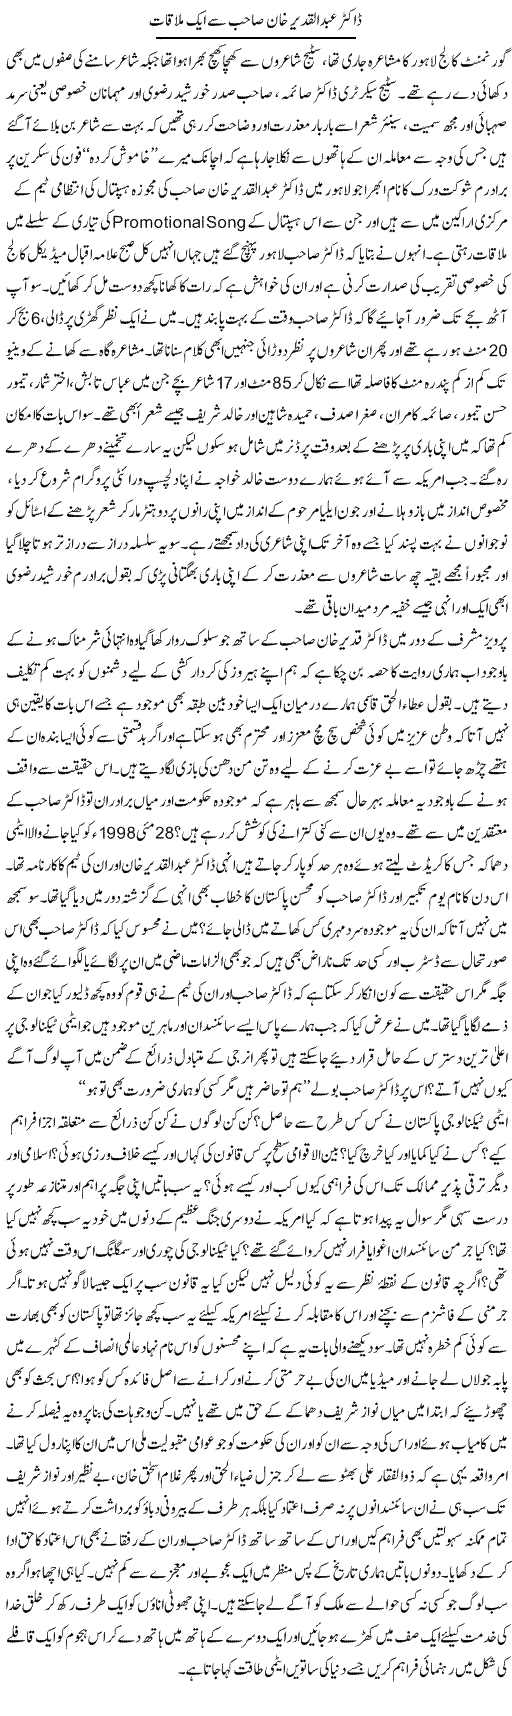 Dr Abdul Qadeer Khan se aik Mulaqat by Amjad Islam Amjad